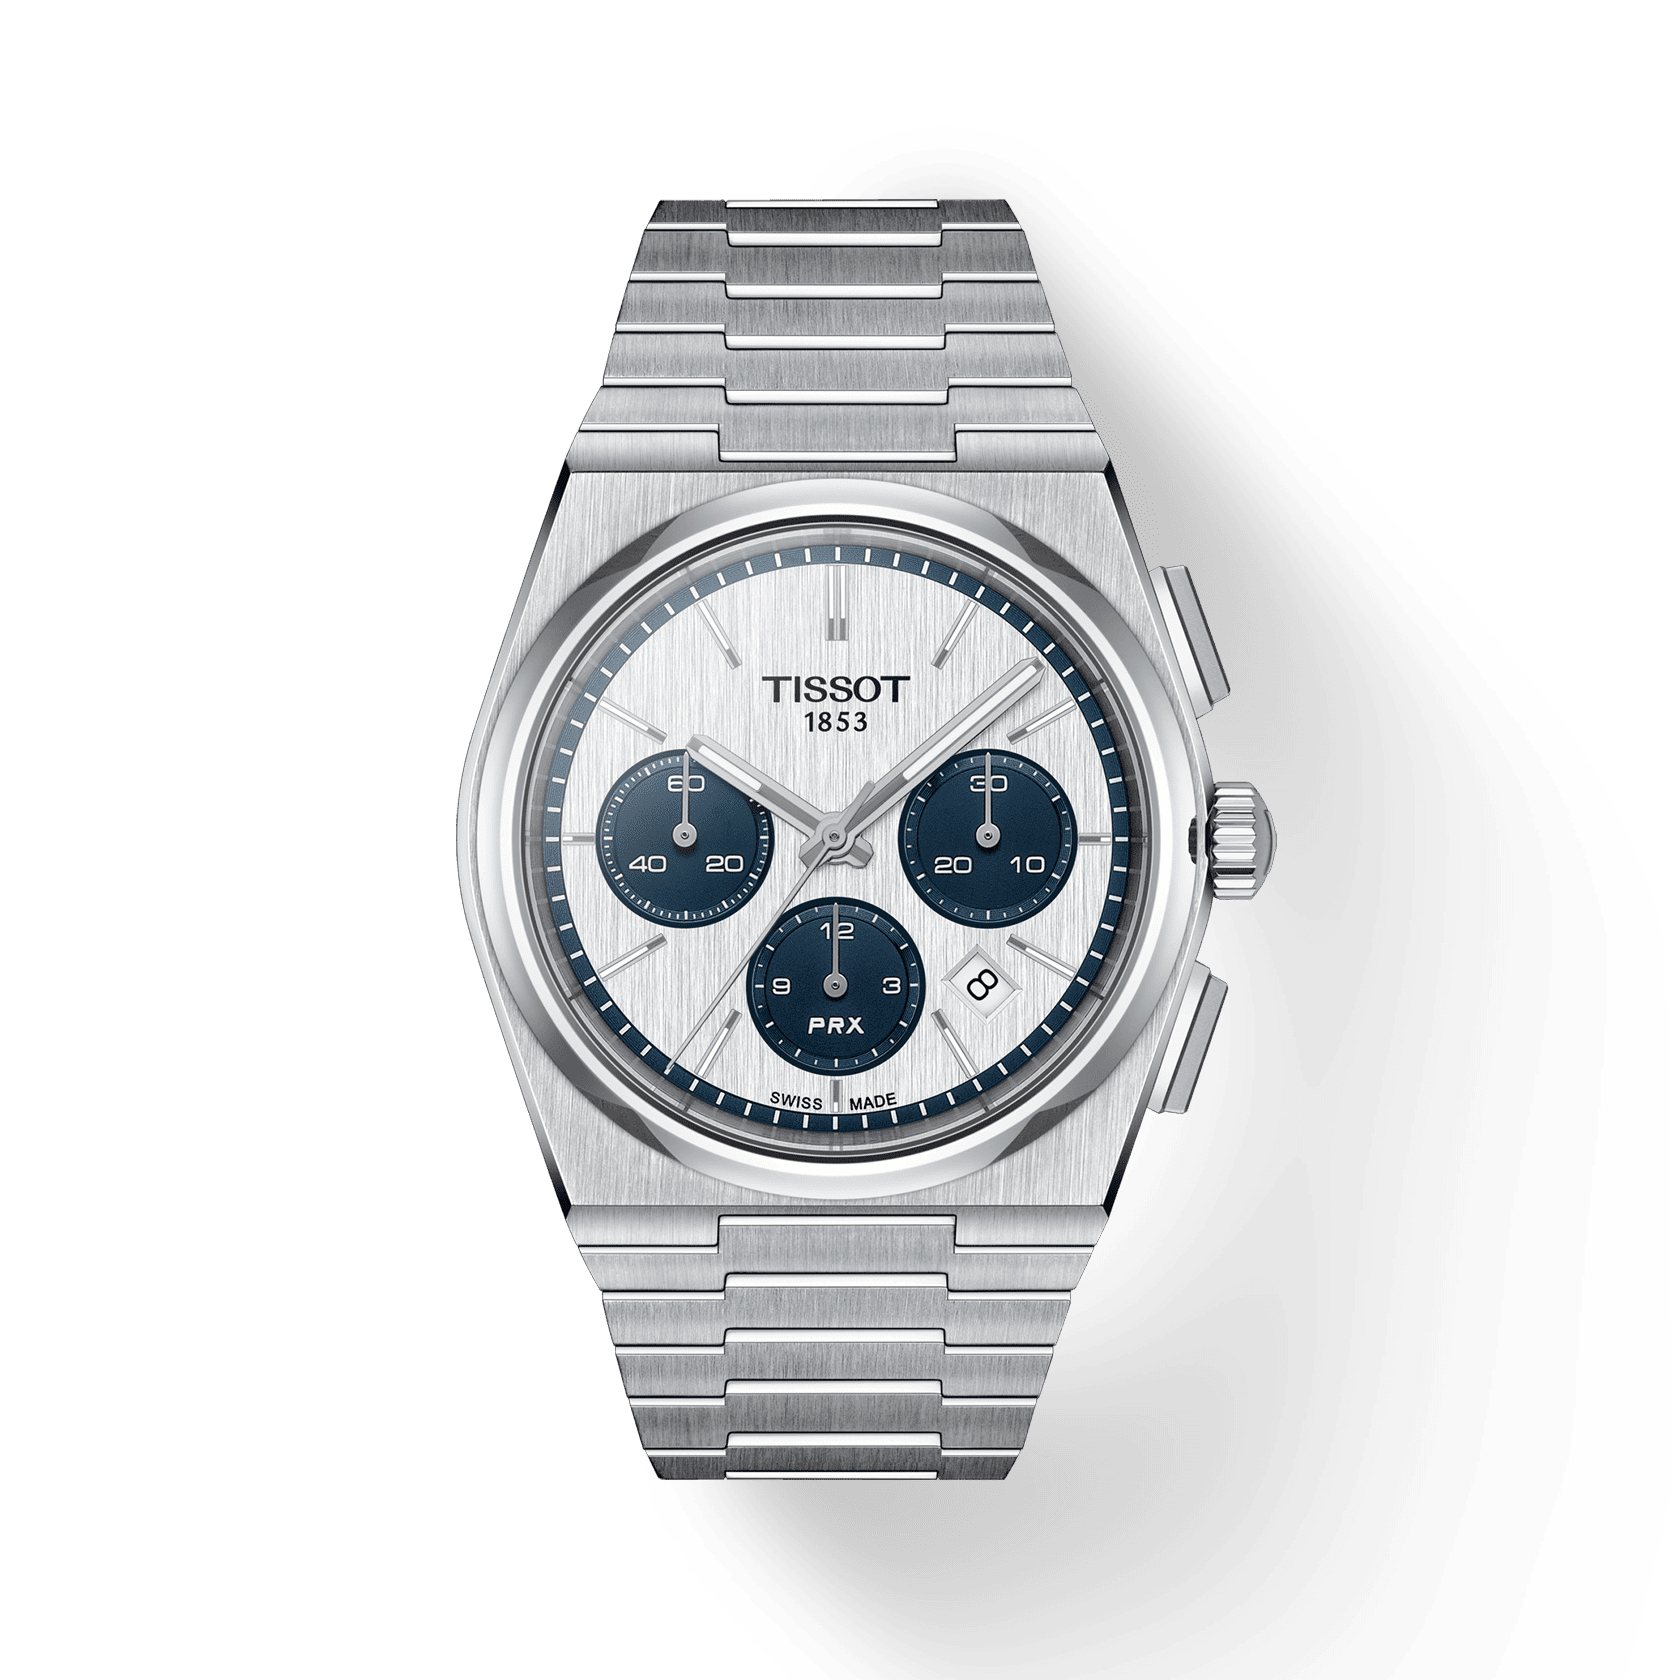 TISSOTティソ QZ腕時計T675チタニウムクロノグラフクォーツ